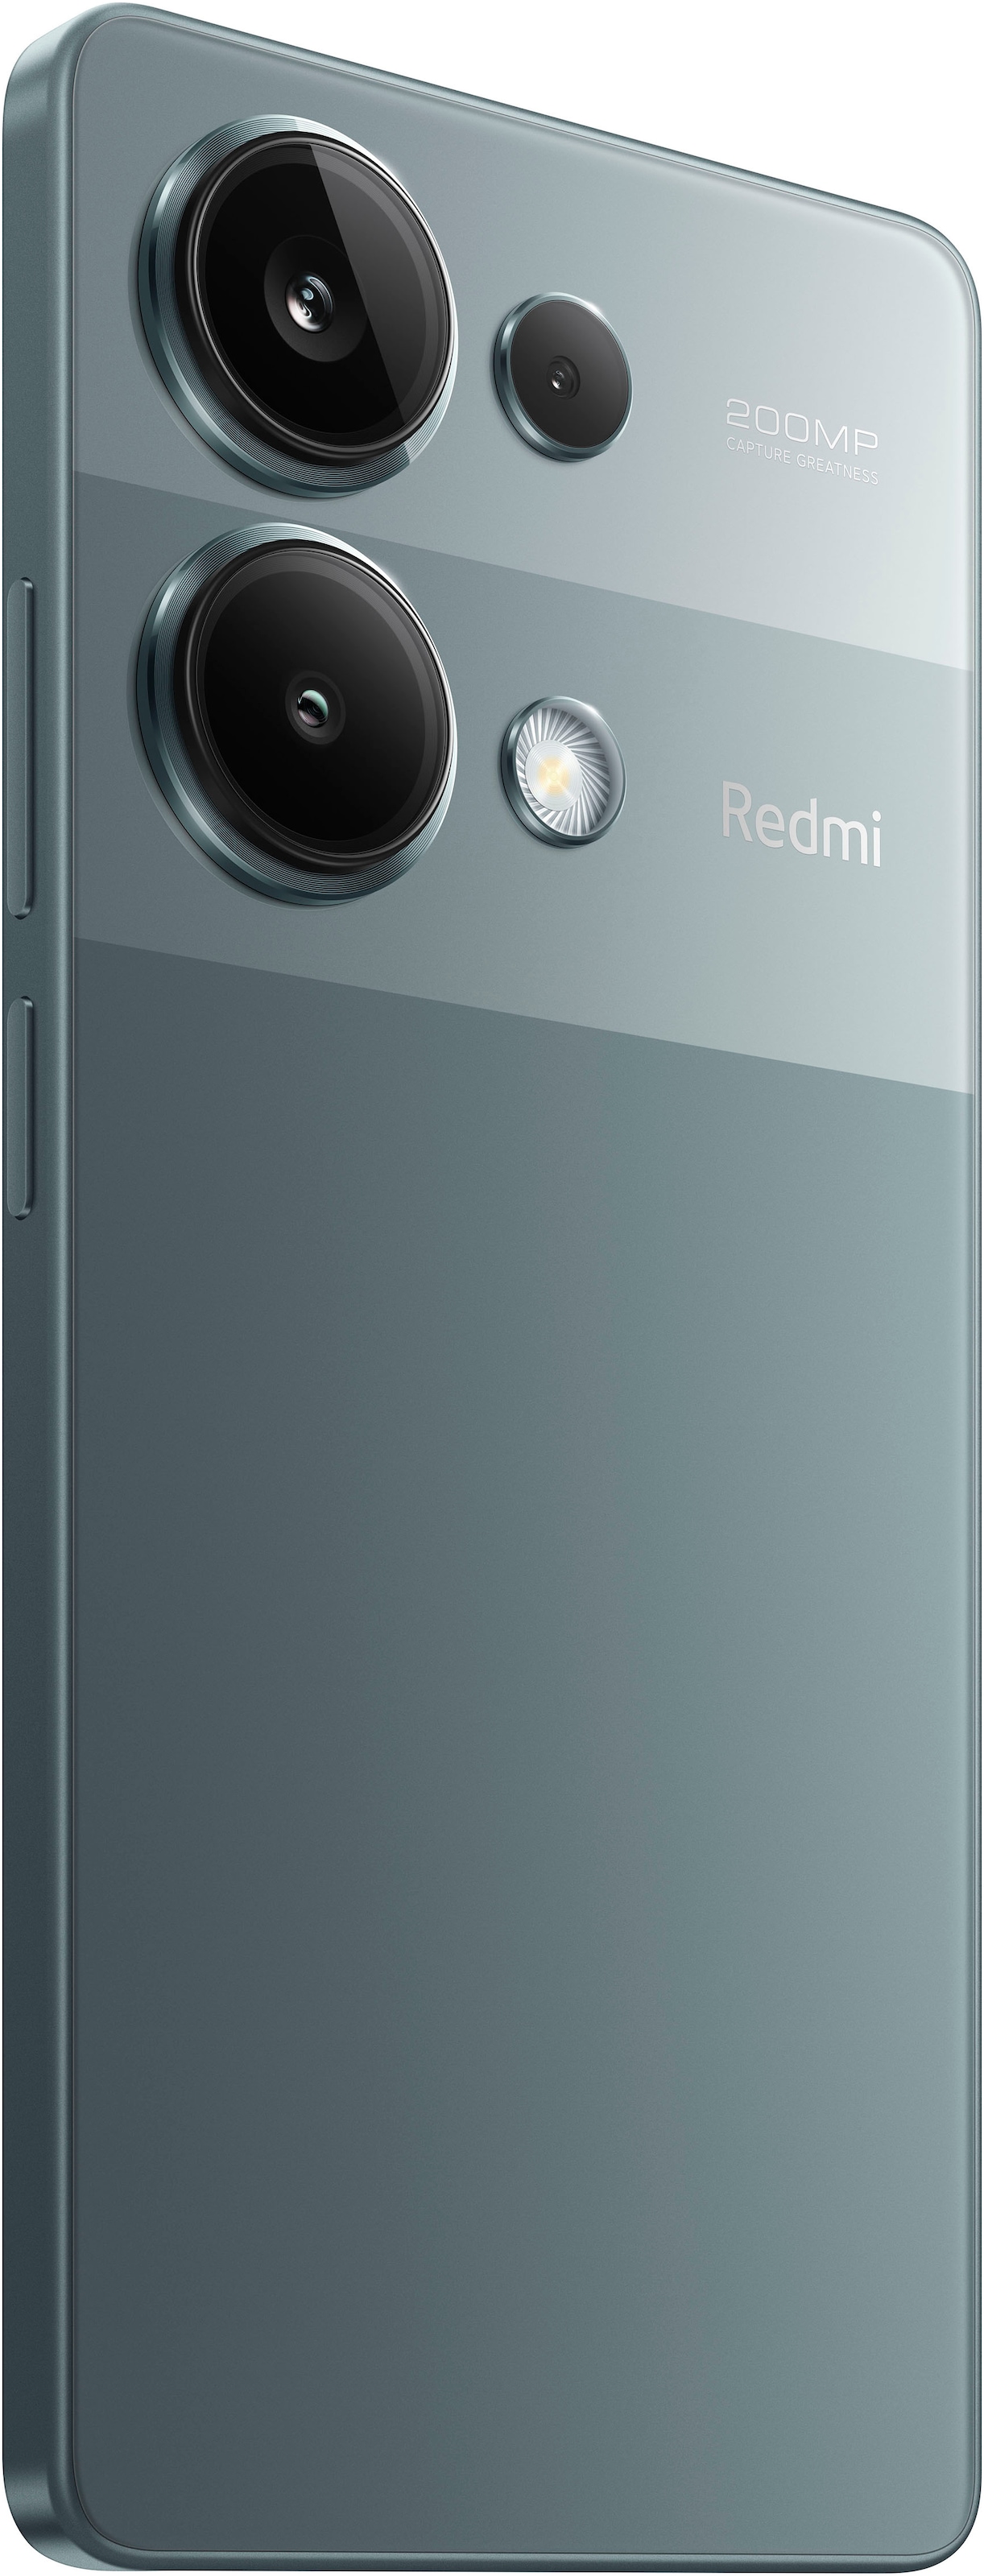 Xiaomi Smartphone »Redmi Note 13 Pro 256Gb«, Forest Green, 16,94 cm/6,67 Zoll, 256 GB Speicherplatz, 200 MP Kamera